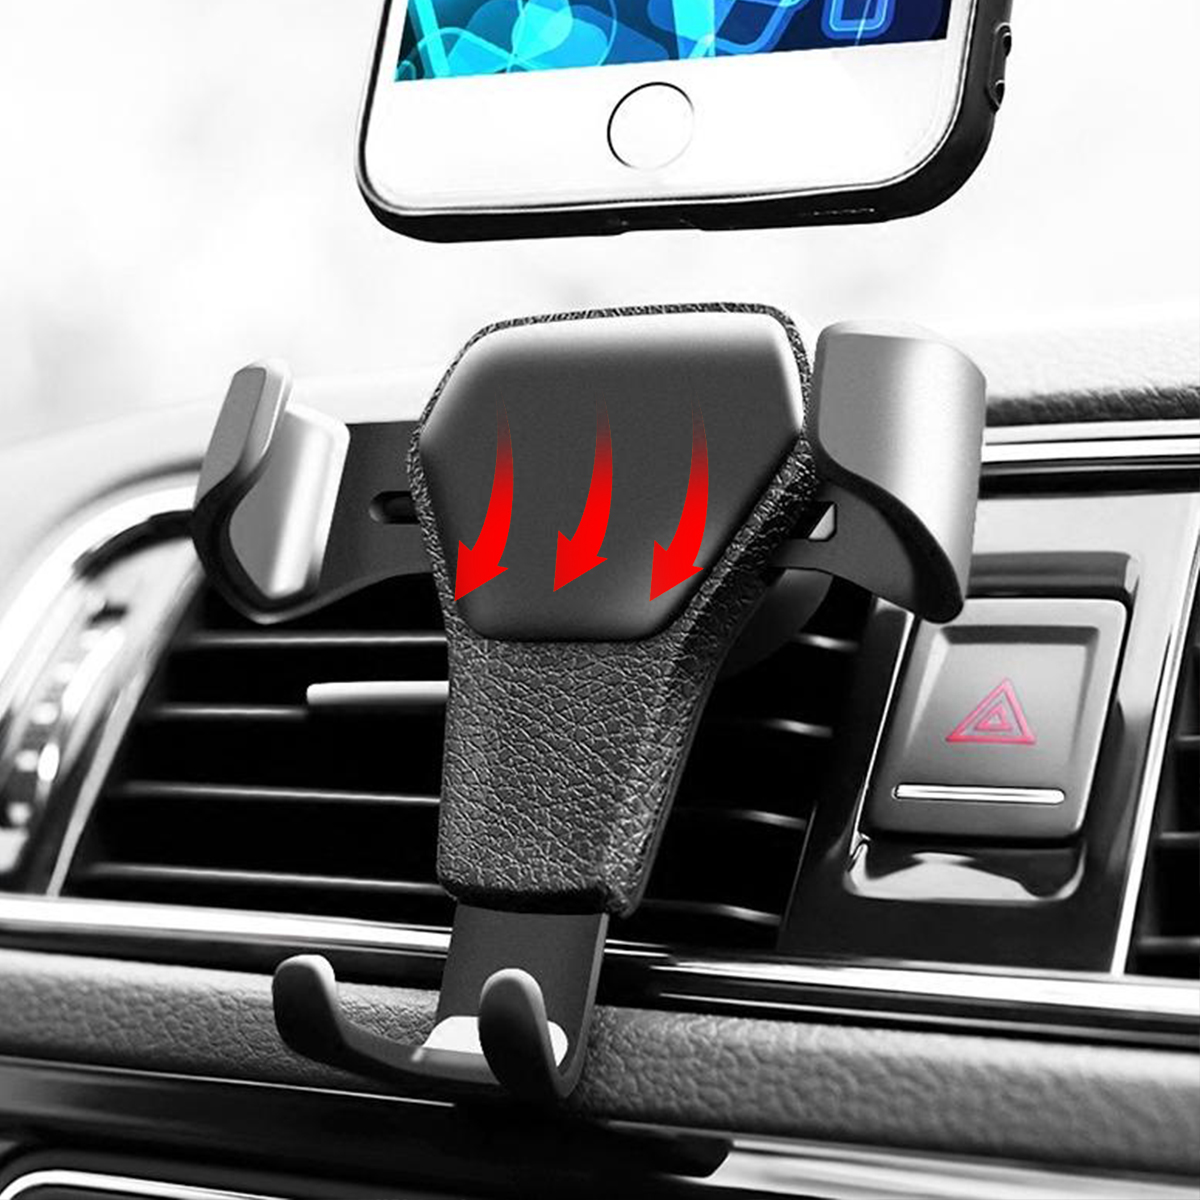 

Universal Gravity Black Car Air Outlet Bracket Phone Holder